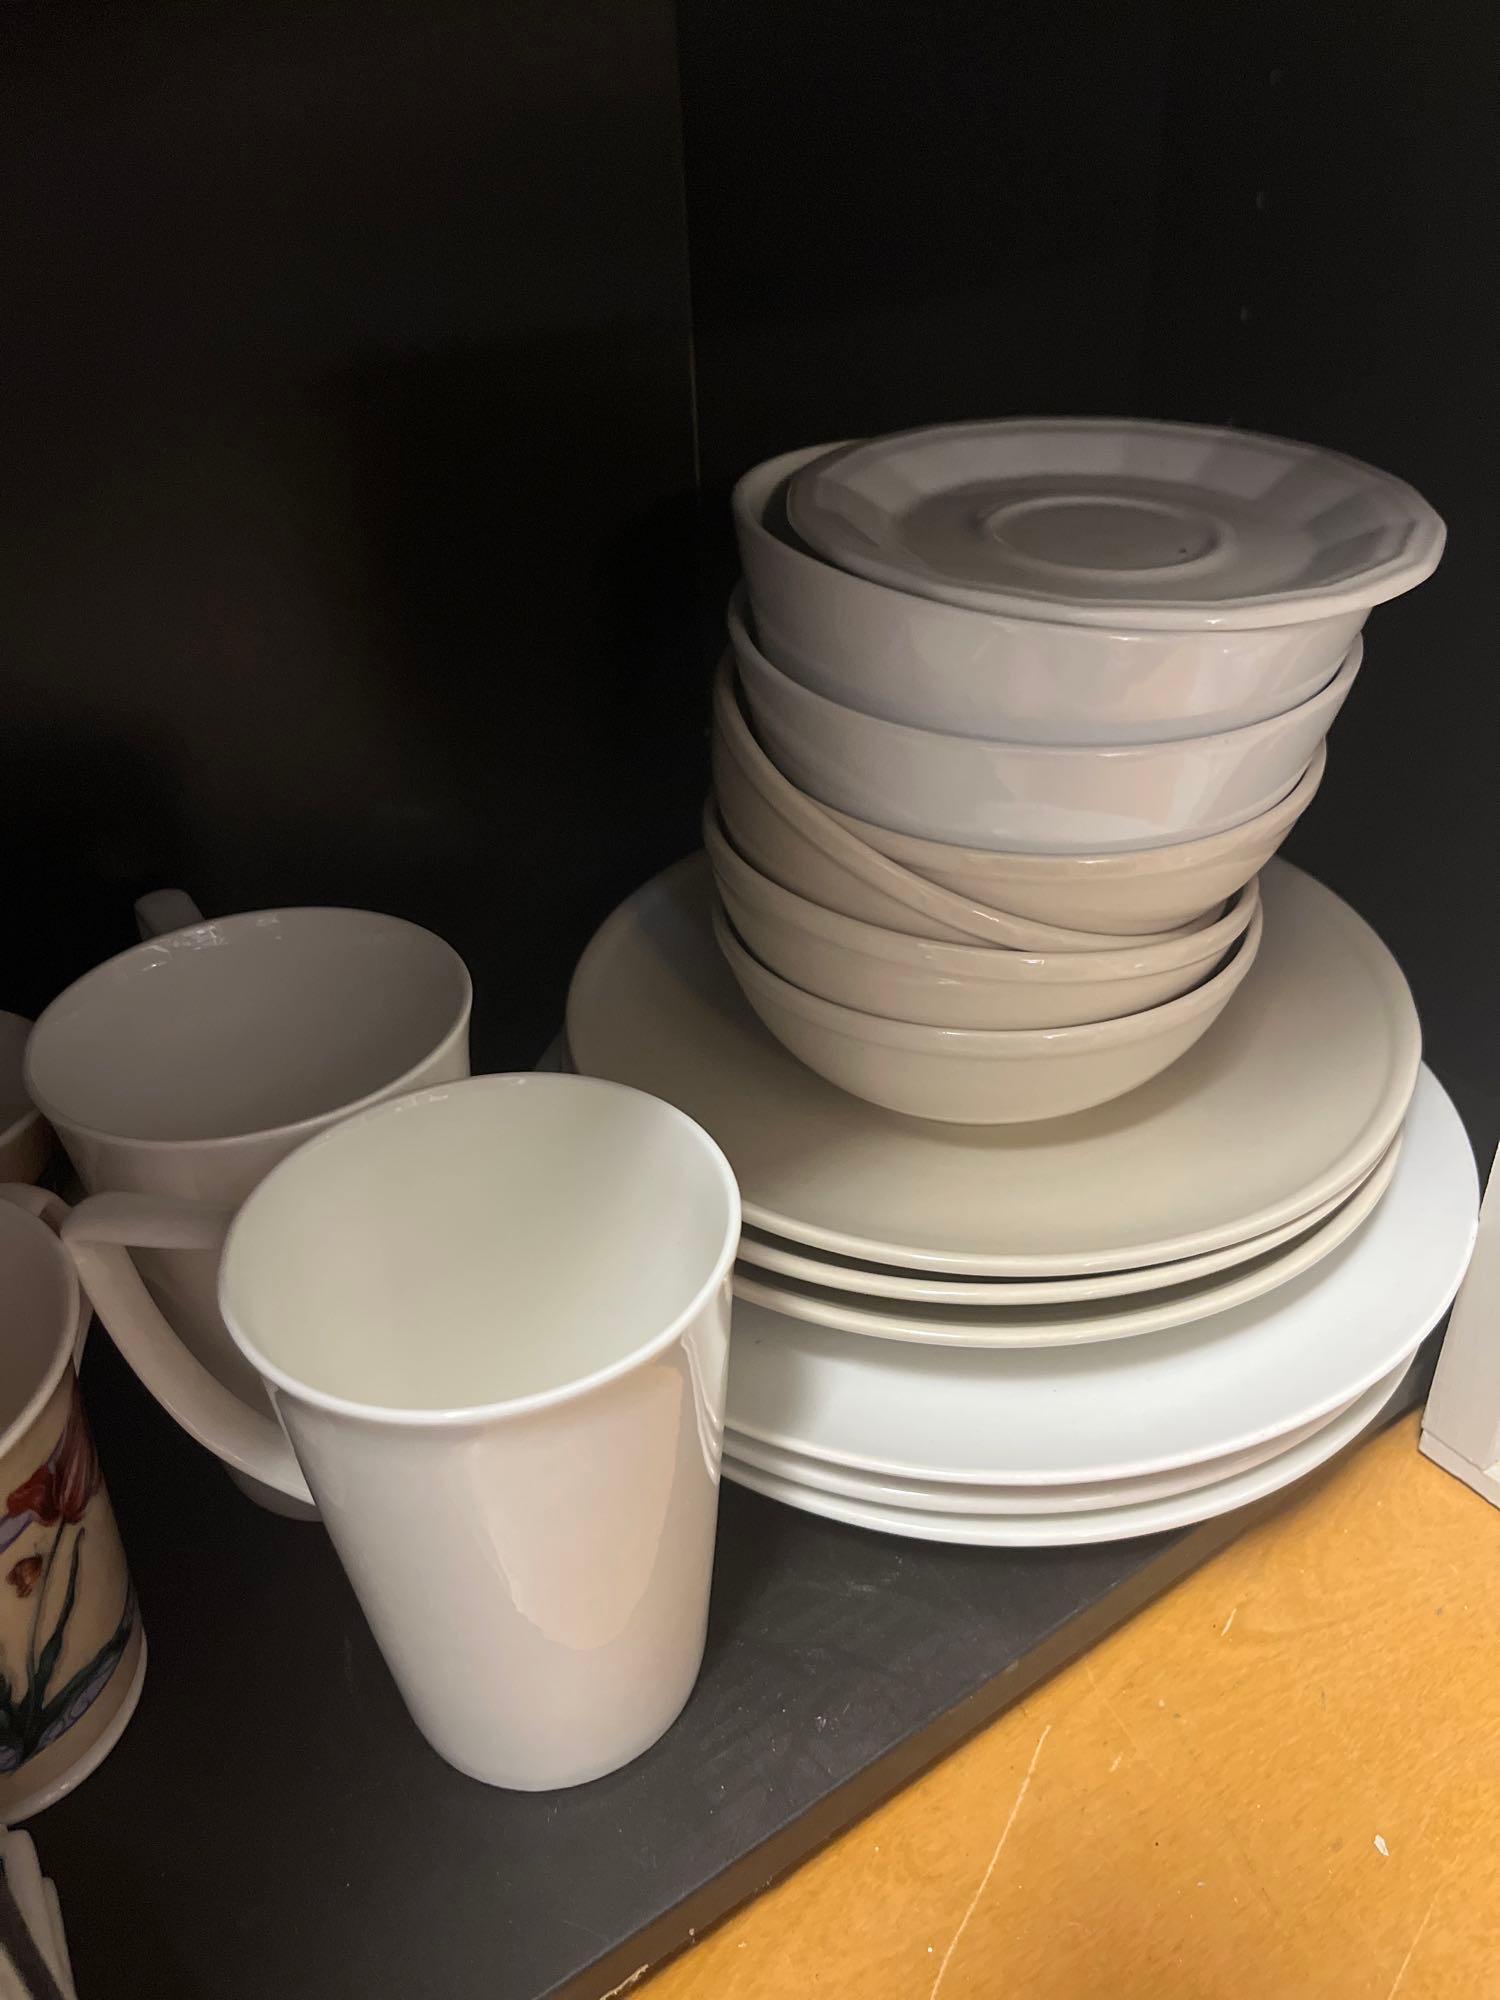 Huge lot, shelf not included. White large bowl, cow milk server, cookie jar, mugs, bowls, plates,